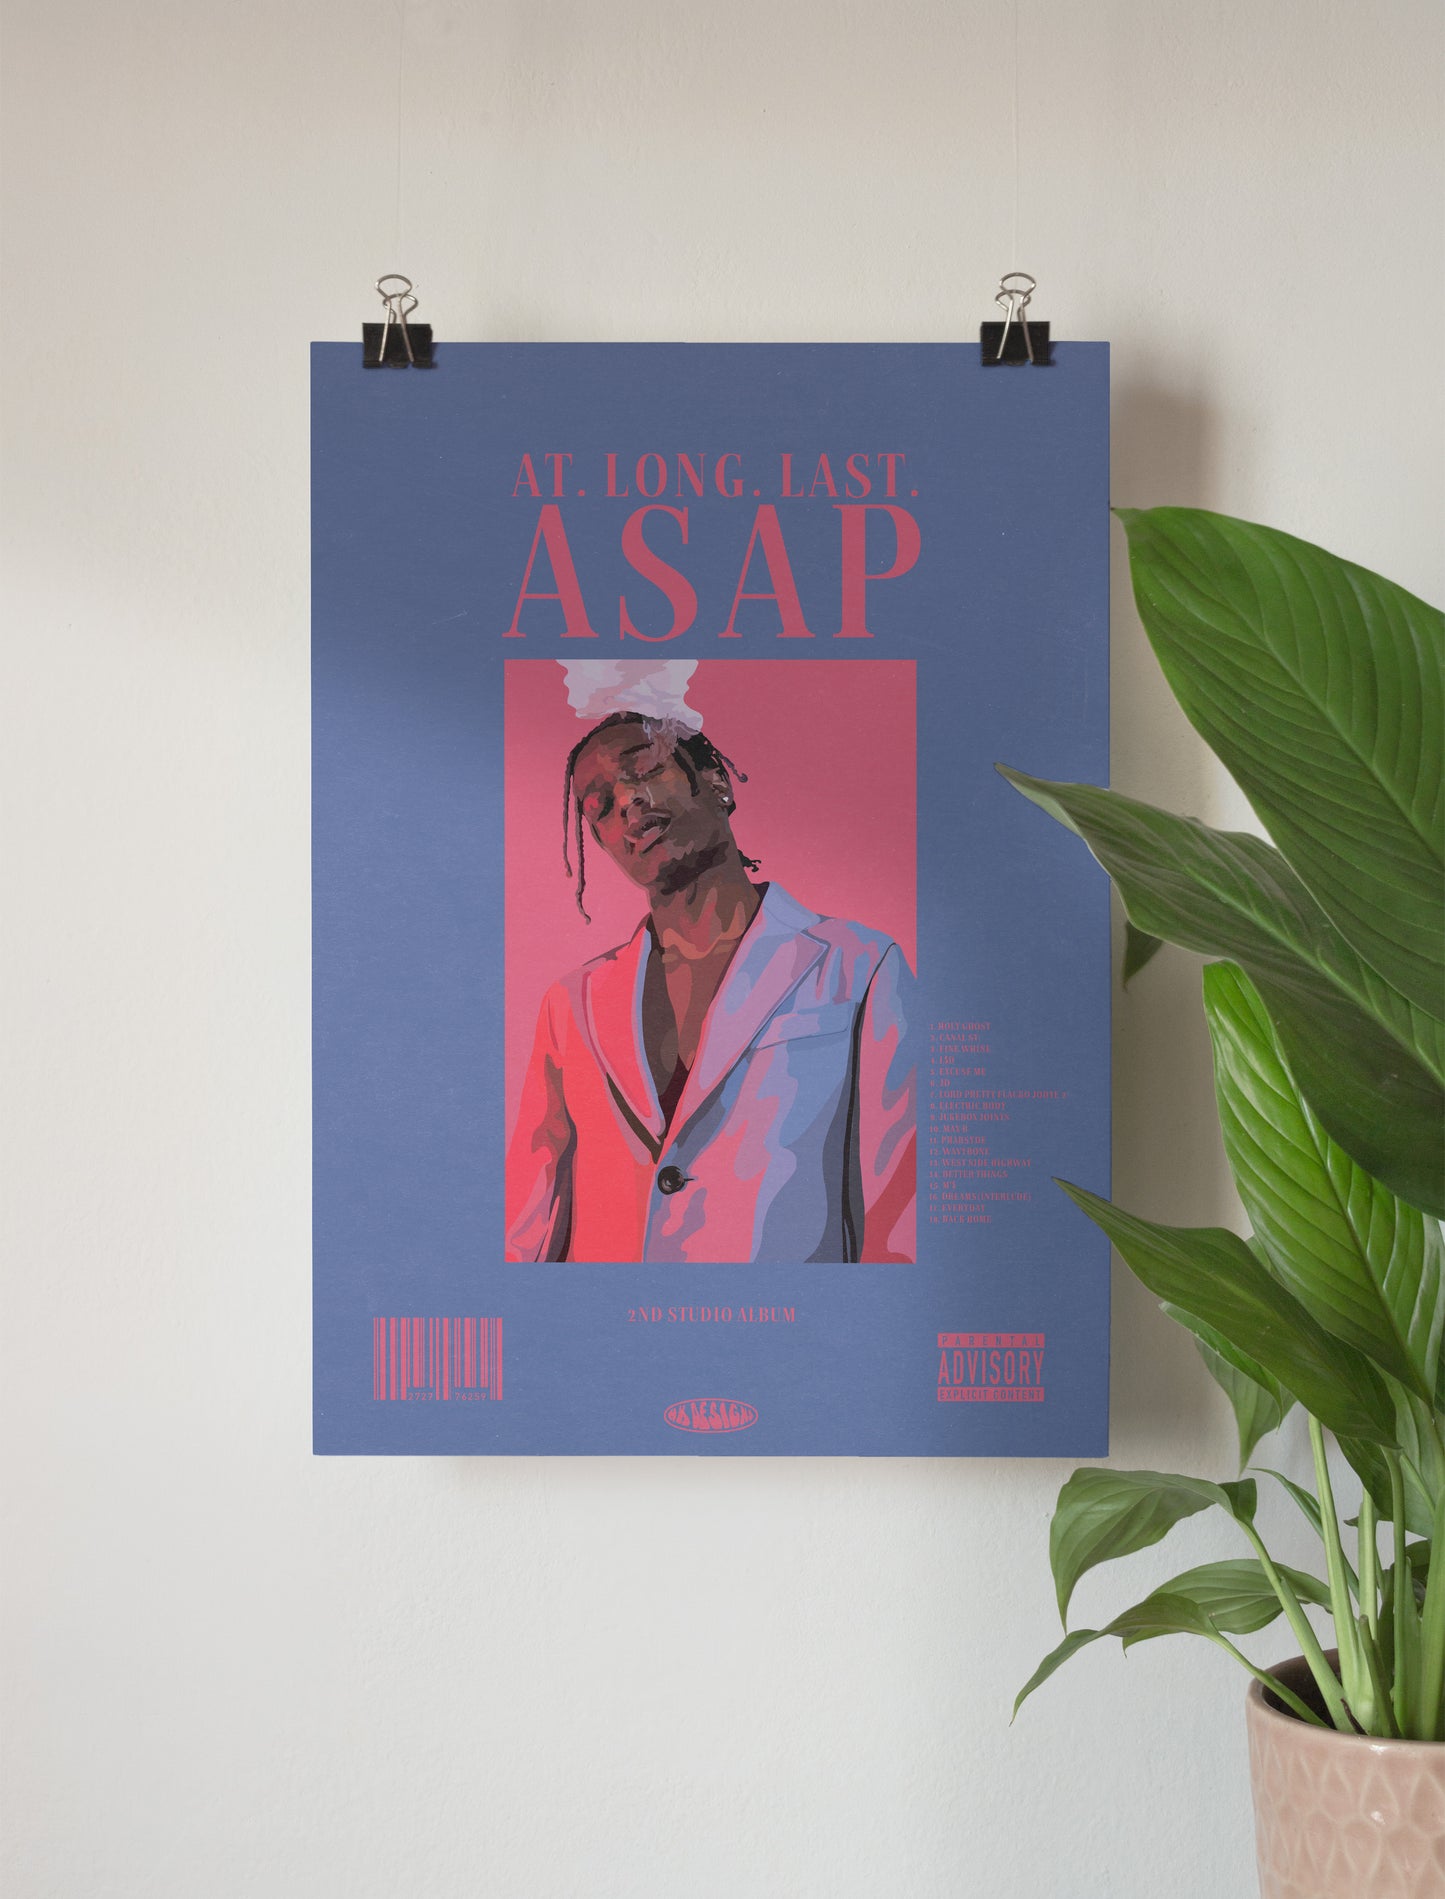 ‘At. Long. Last. ASAP’ by A$AP Rocky